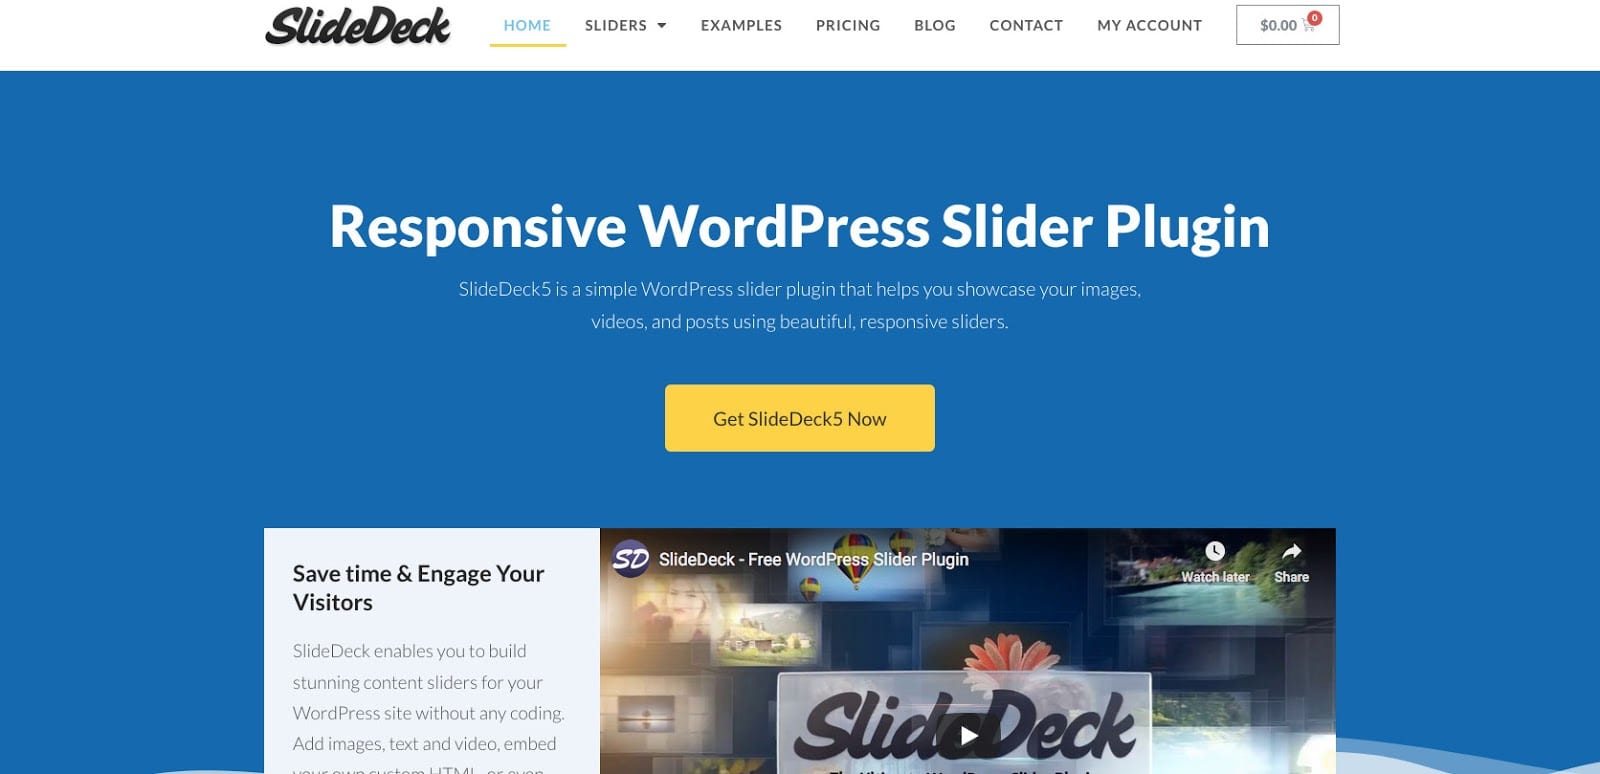 Responsive WordPress Slider Plugin SlideDeck